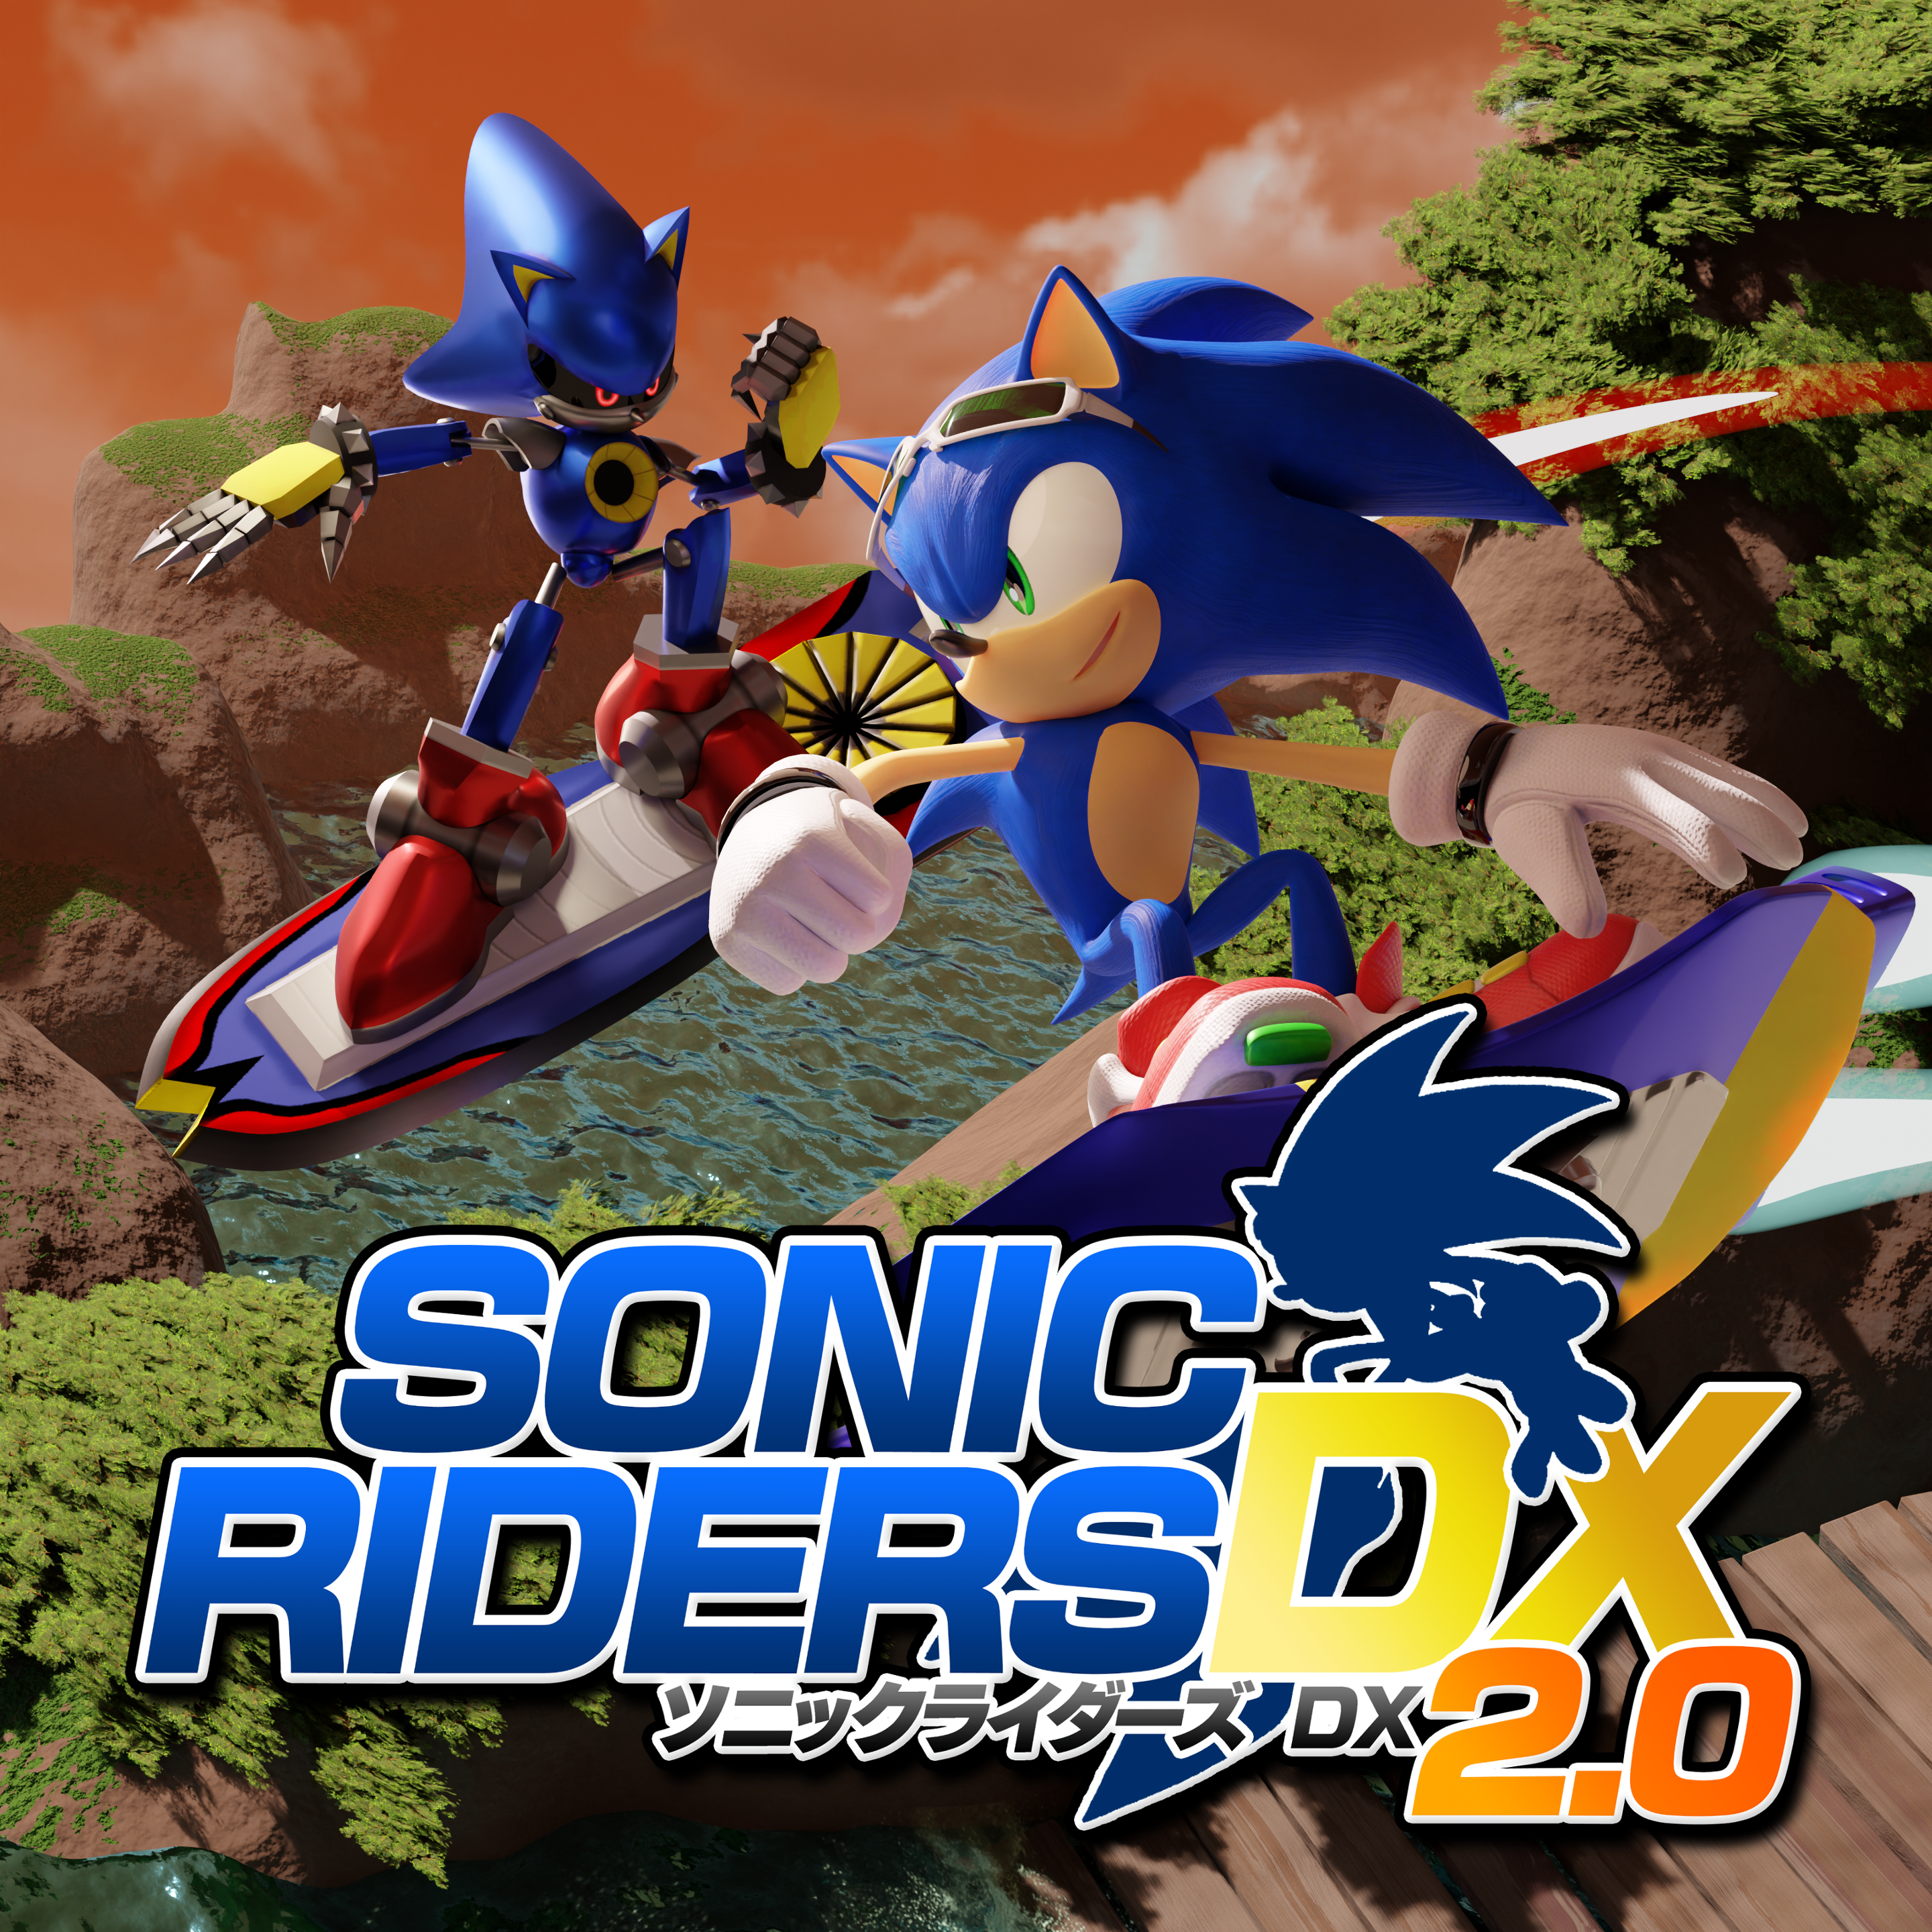 Sonic the hedgehog on X: Hyper 3  / X